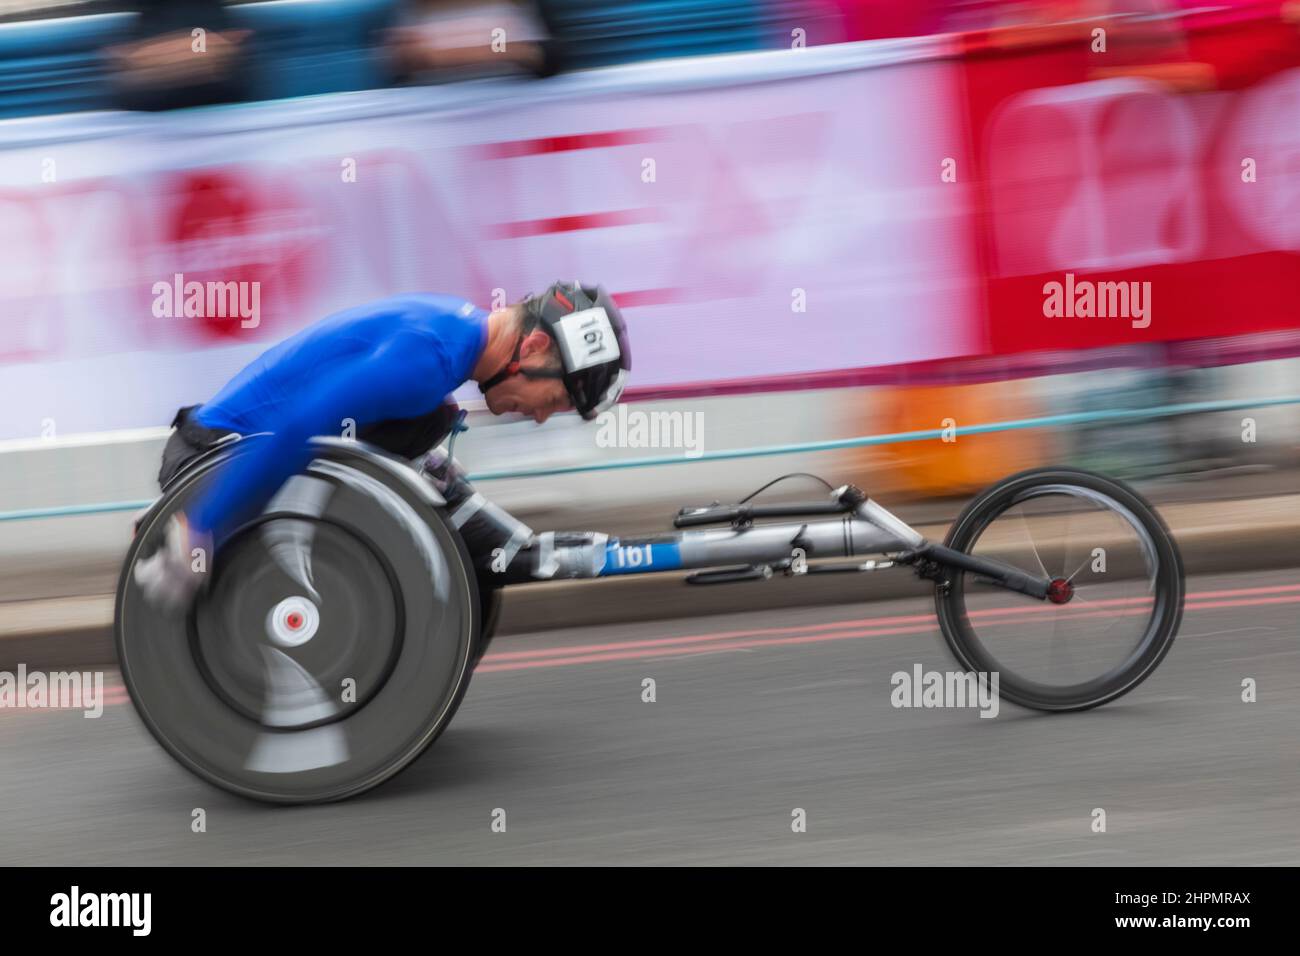 Inghilterra, Londra, London Marathon 2021, Men's Wheelchair Racers Crossing Tower Bridge Foto Stock